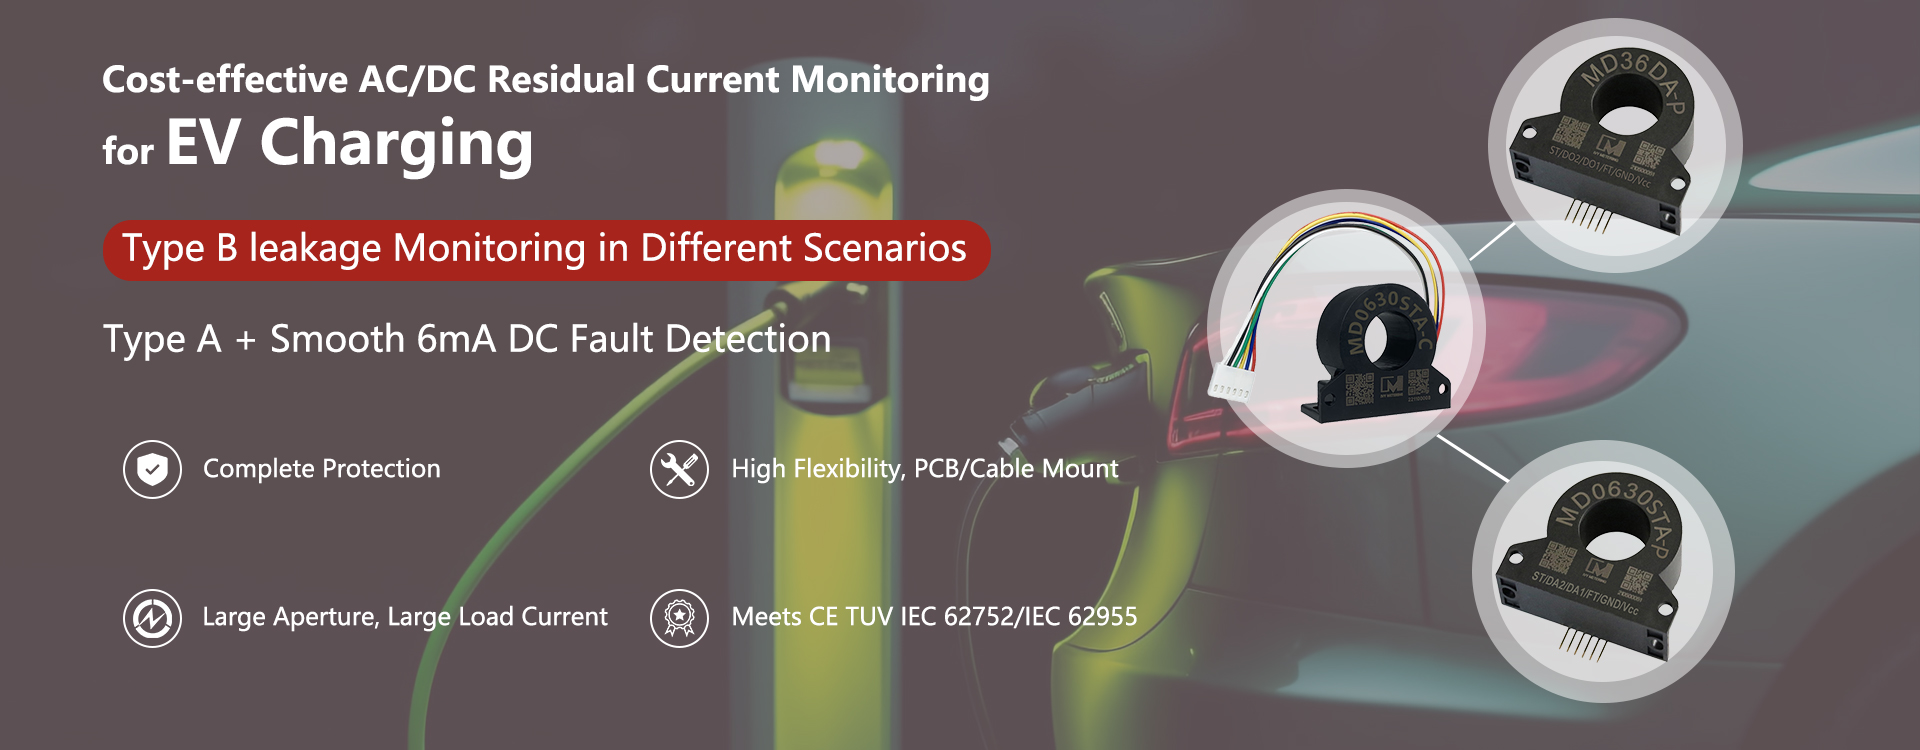 RCD AC 30mA DC 6mA, Leakage Current Sensor, Residual Current Monitoring, Type B RCD